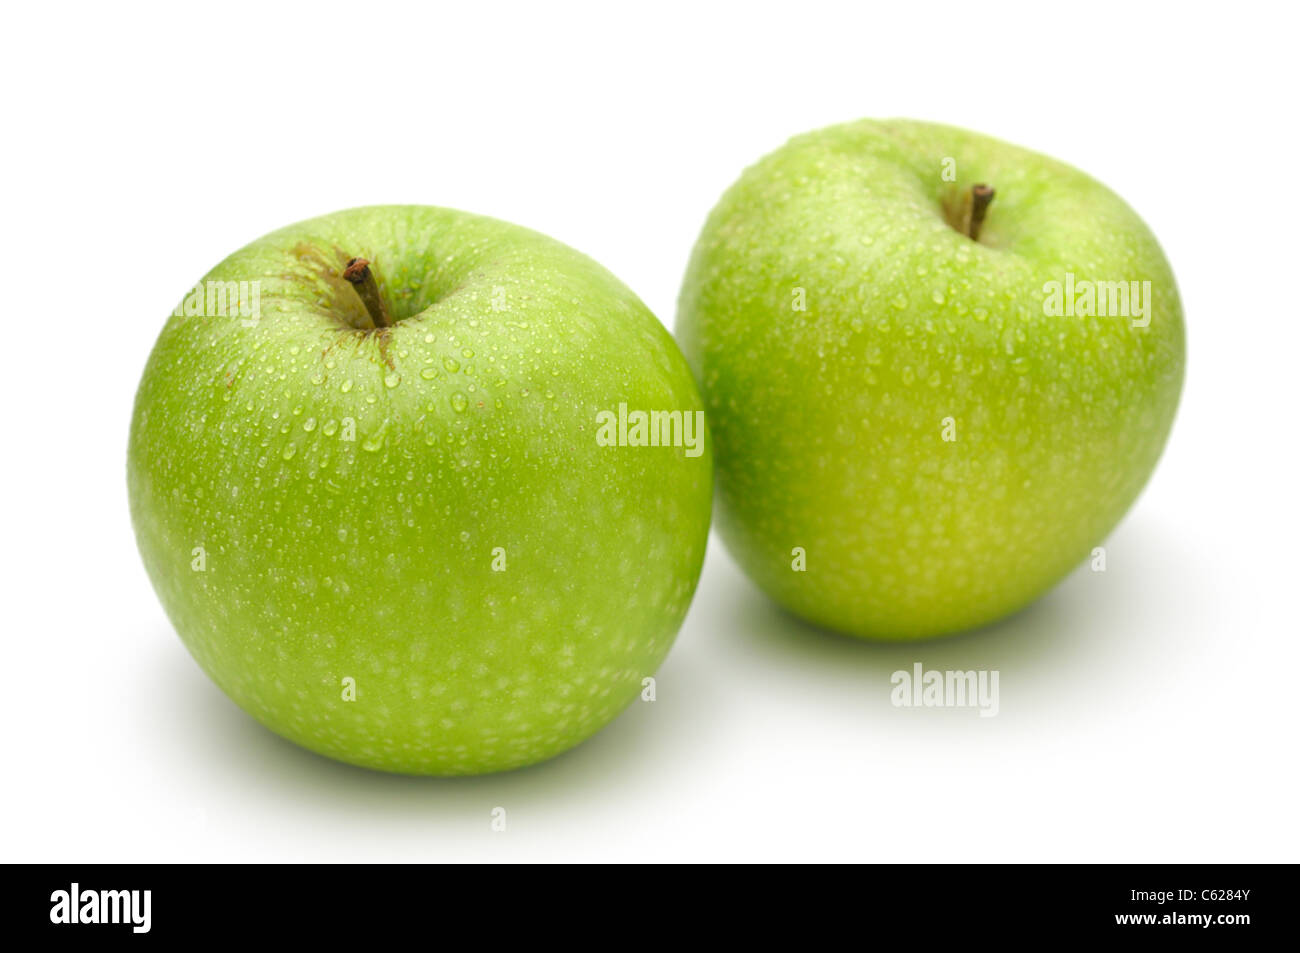 Le mele Granny Smith, tutta la mela verde Foto Stock